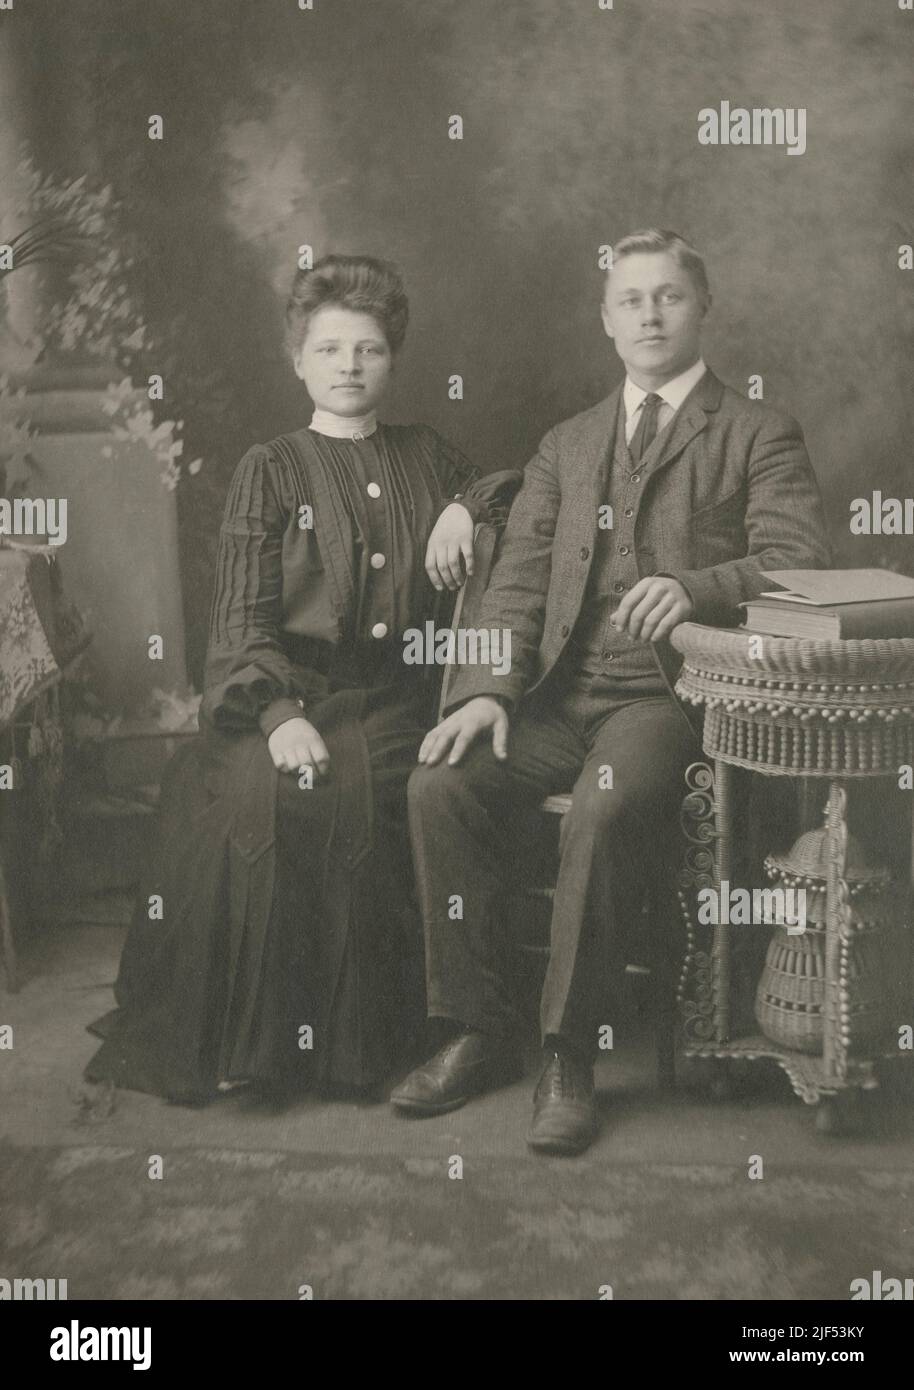 Antigua foto de alrededor de 1890s de una joven pareja soltera en o cerca de Fitchburg, Massachusetts, EE.UU. La misma pareja aparece casada con anillos en la foto de Alamy #2JF53MX. FUENTE: TARJETA ORIGINAL DEL GABINETE FOTOGRÁFICO Foto de stock